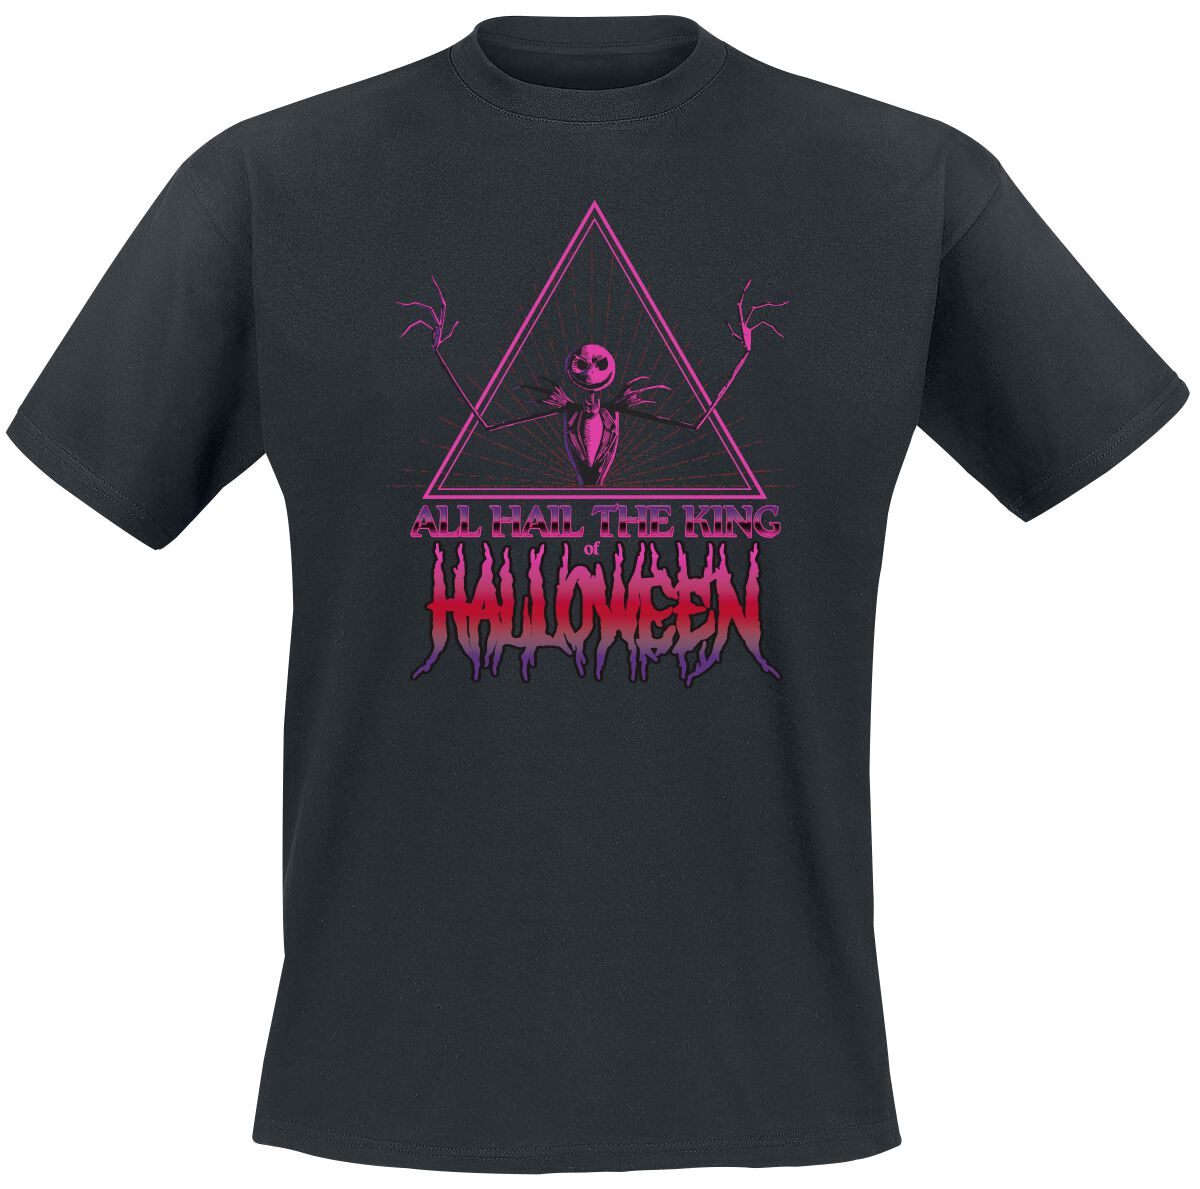 The Nightmare Before Christmas Halloween King T-Shirt schwarz in S